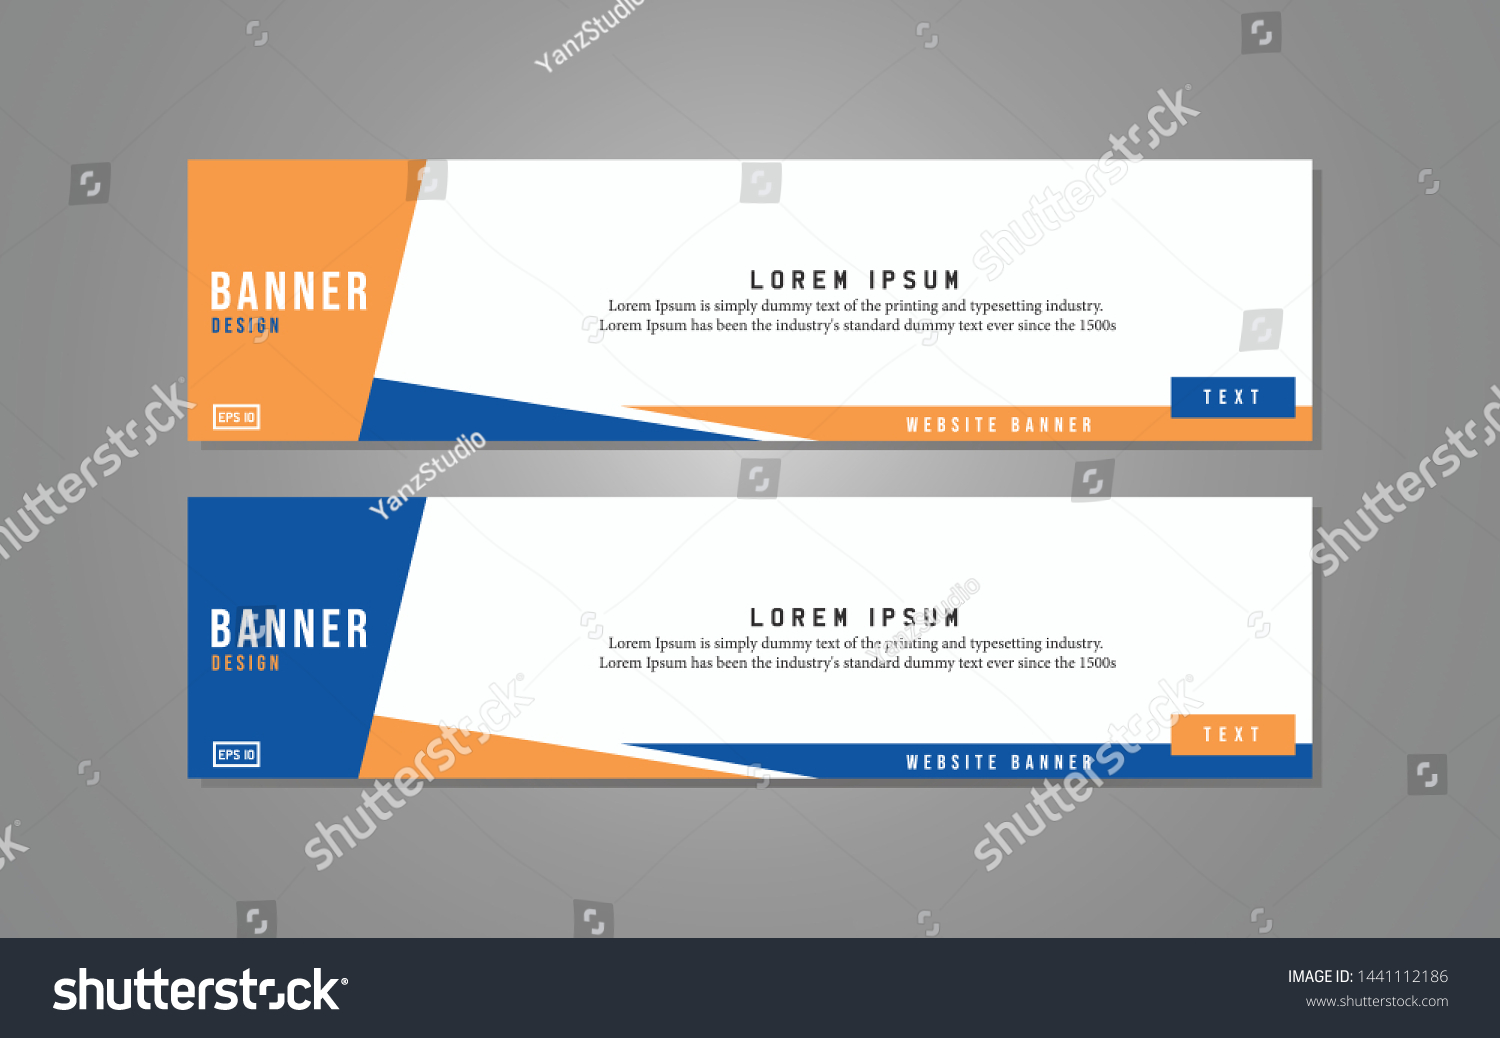 Vector Website Banner Template Design Business Stock Vector With Regard To Website Banner Design Templates